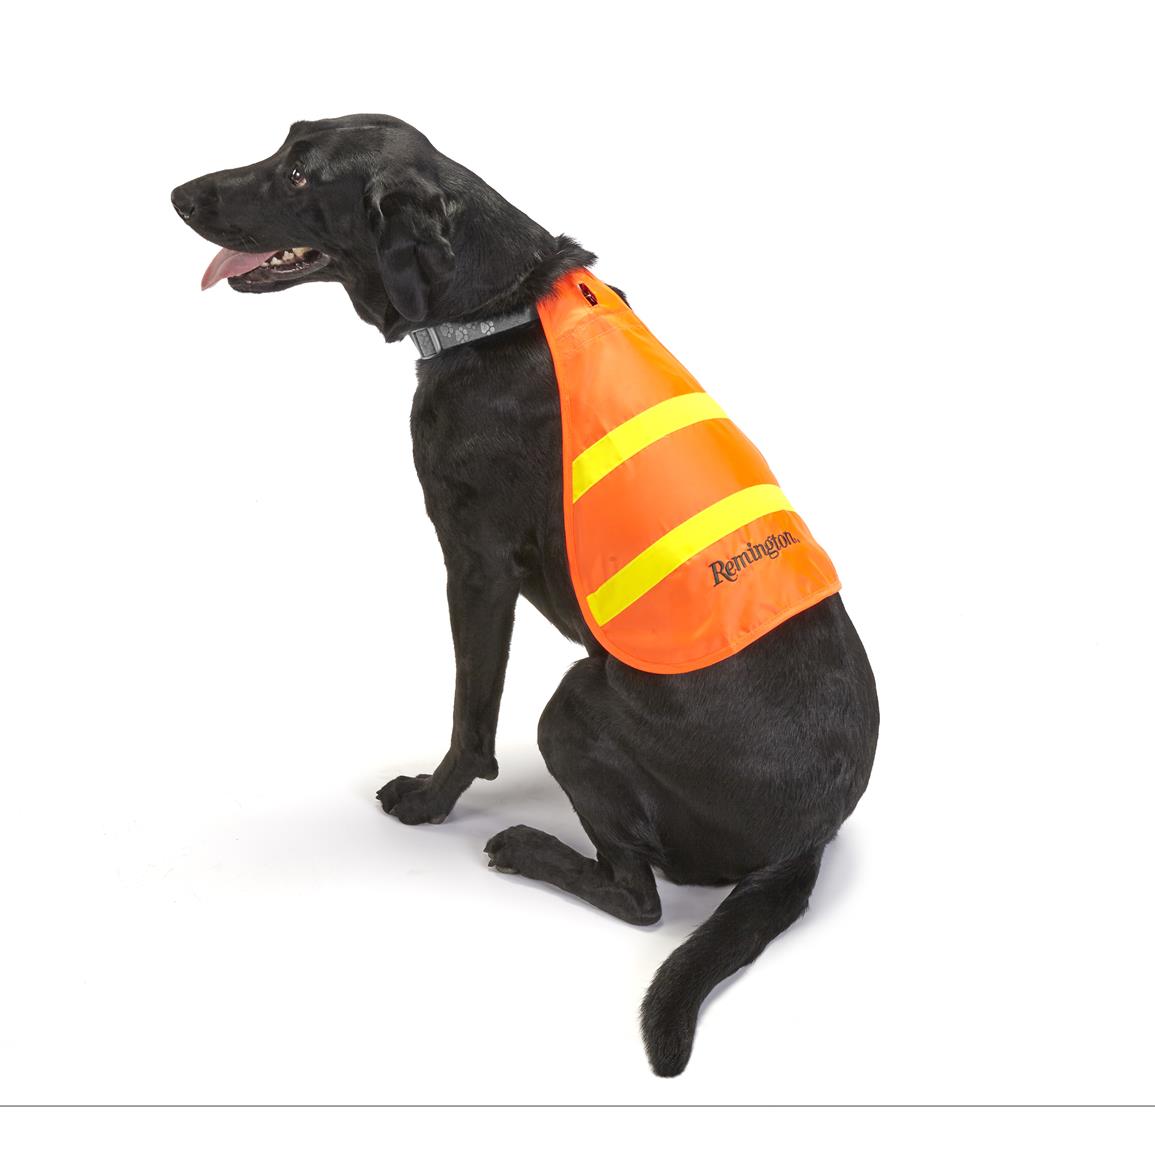 Remington Reflective Safety Vest for Dogs, Orange